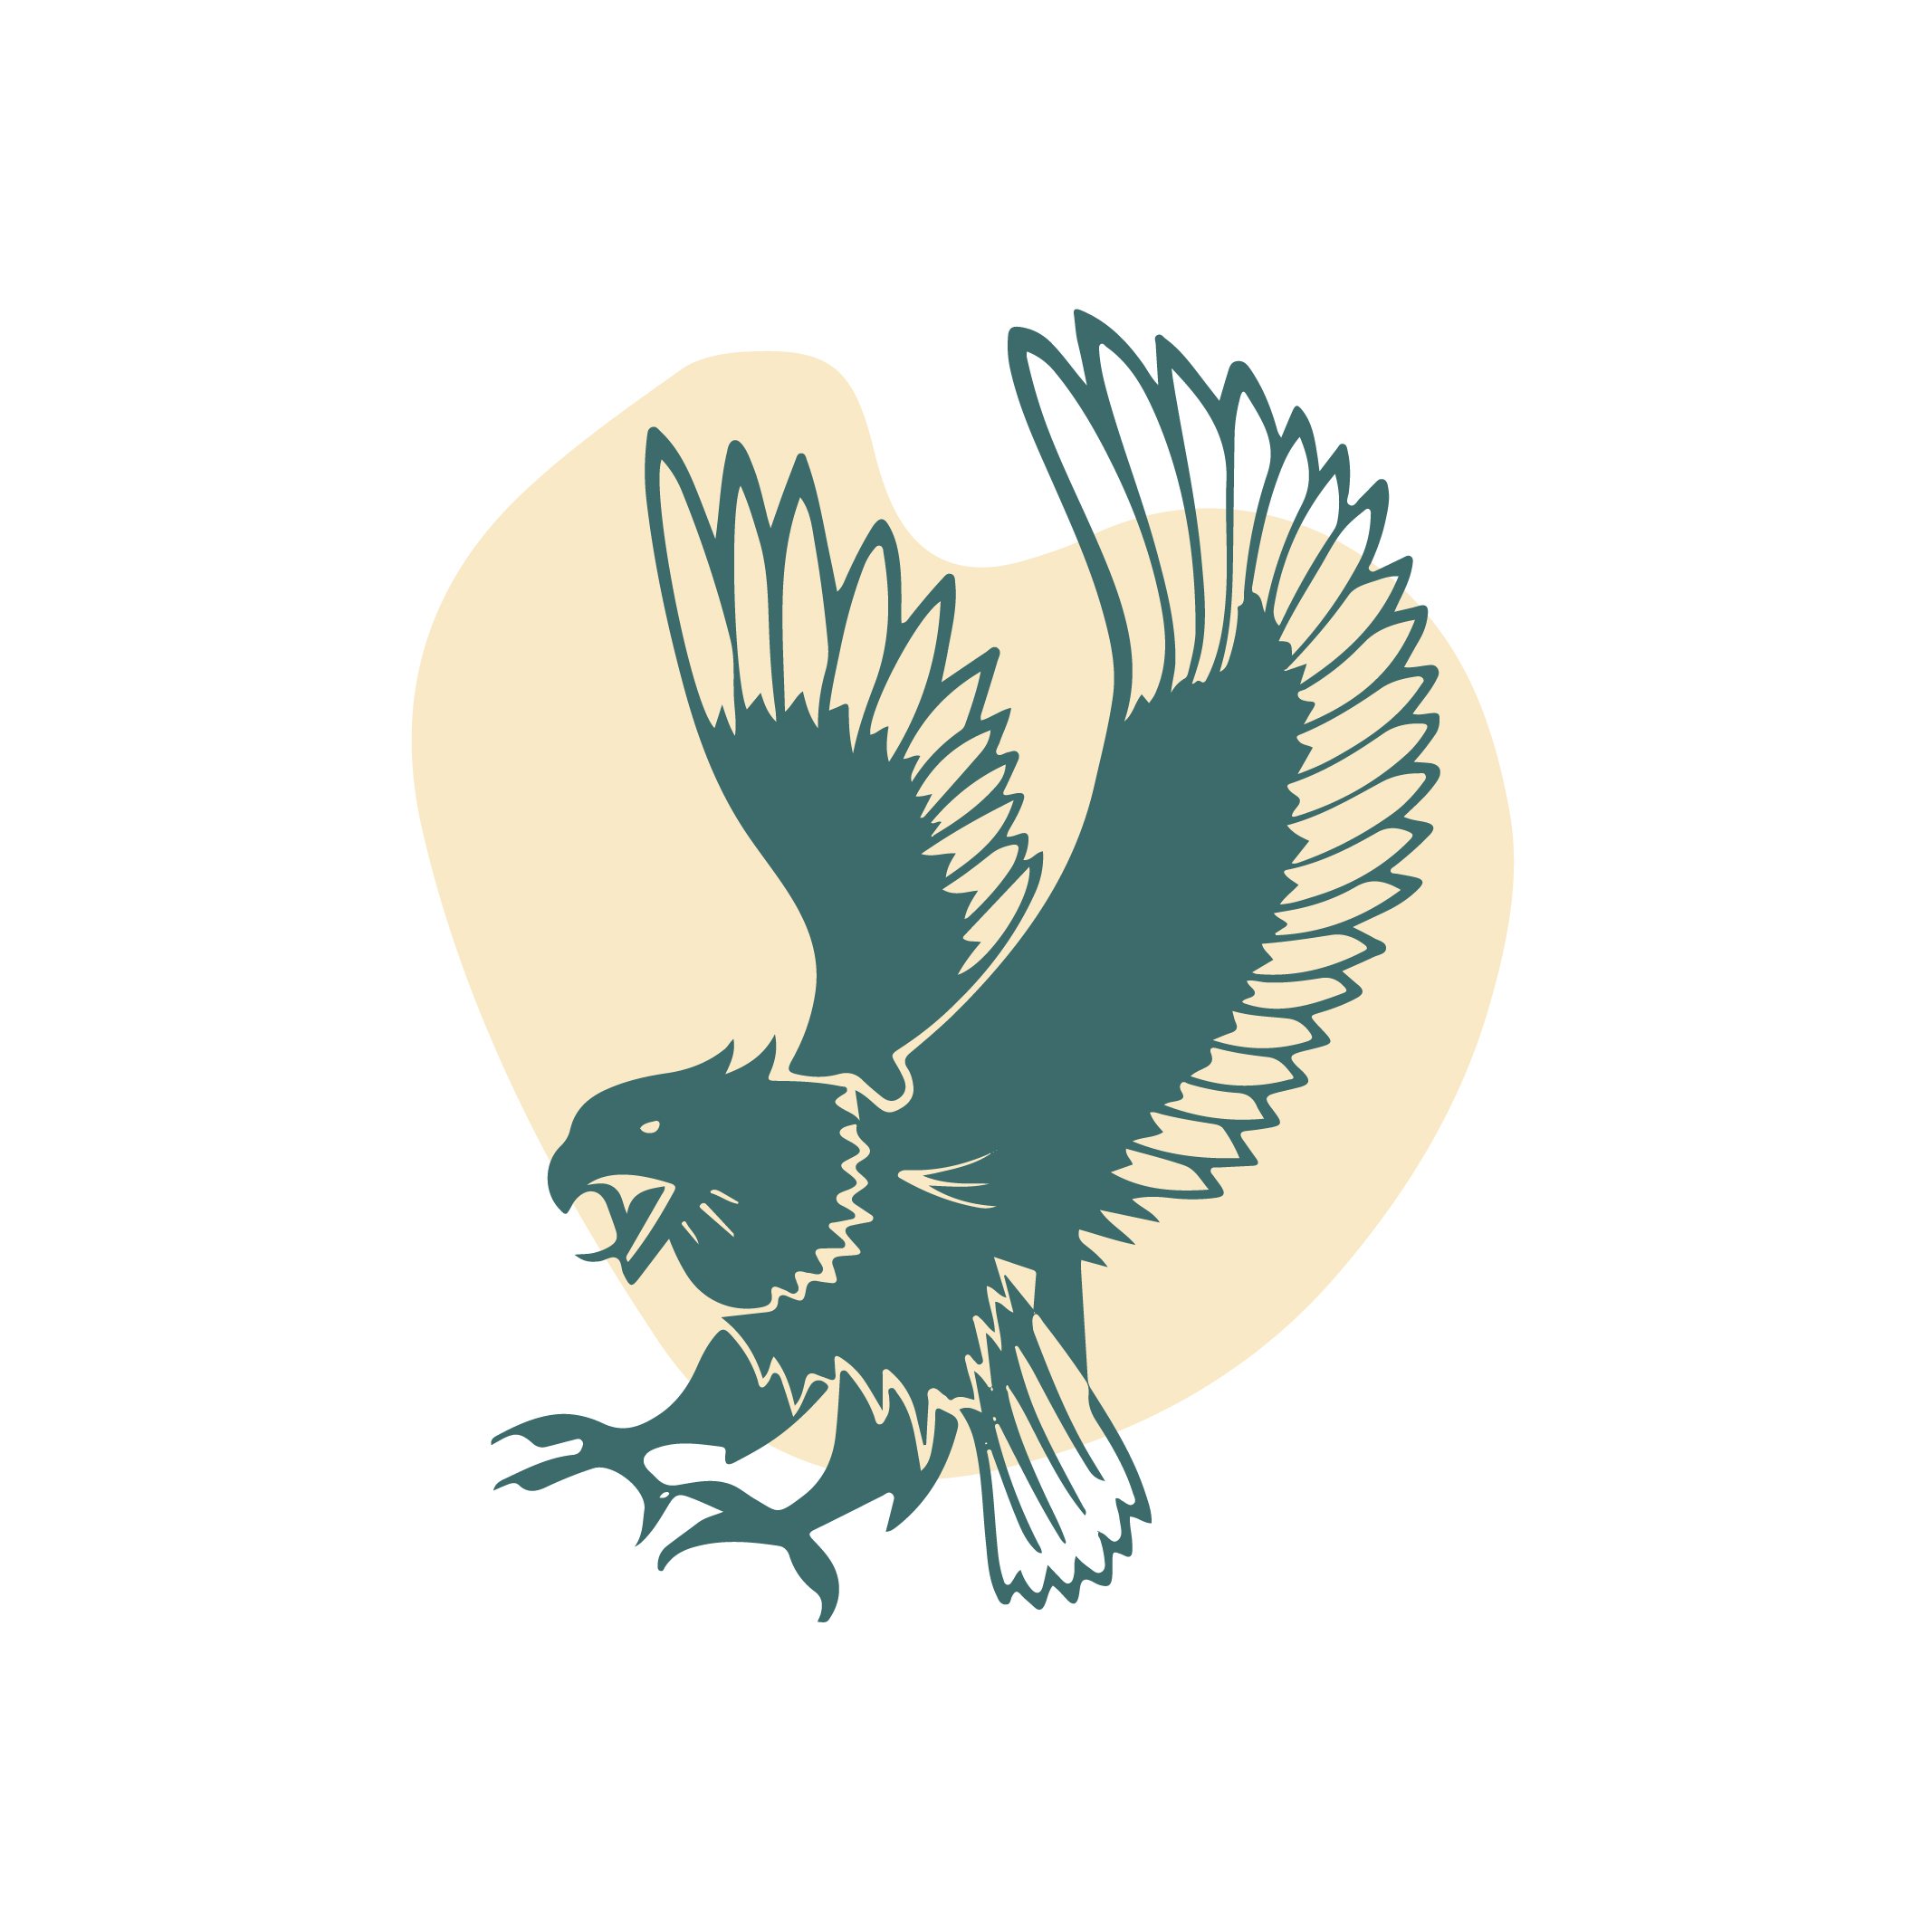 golden eagle logo quiz